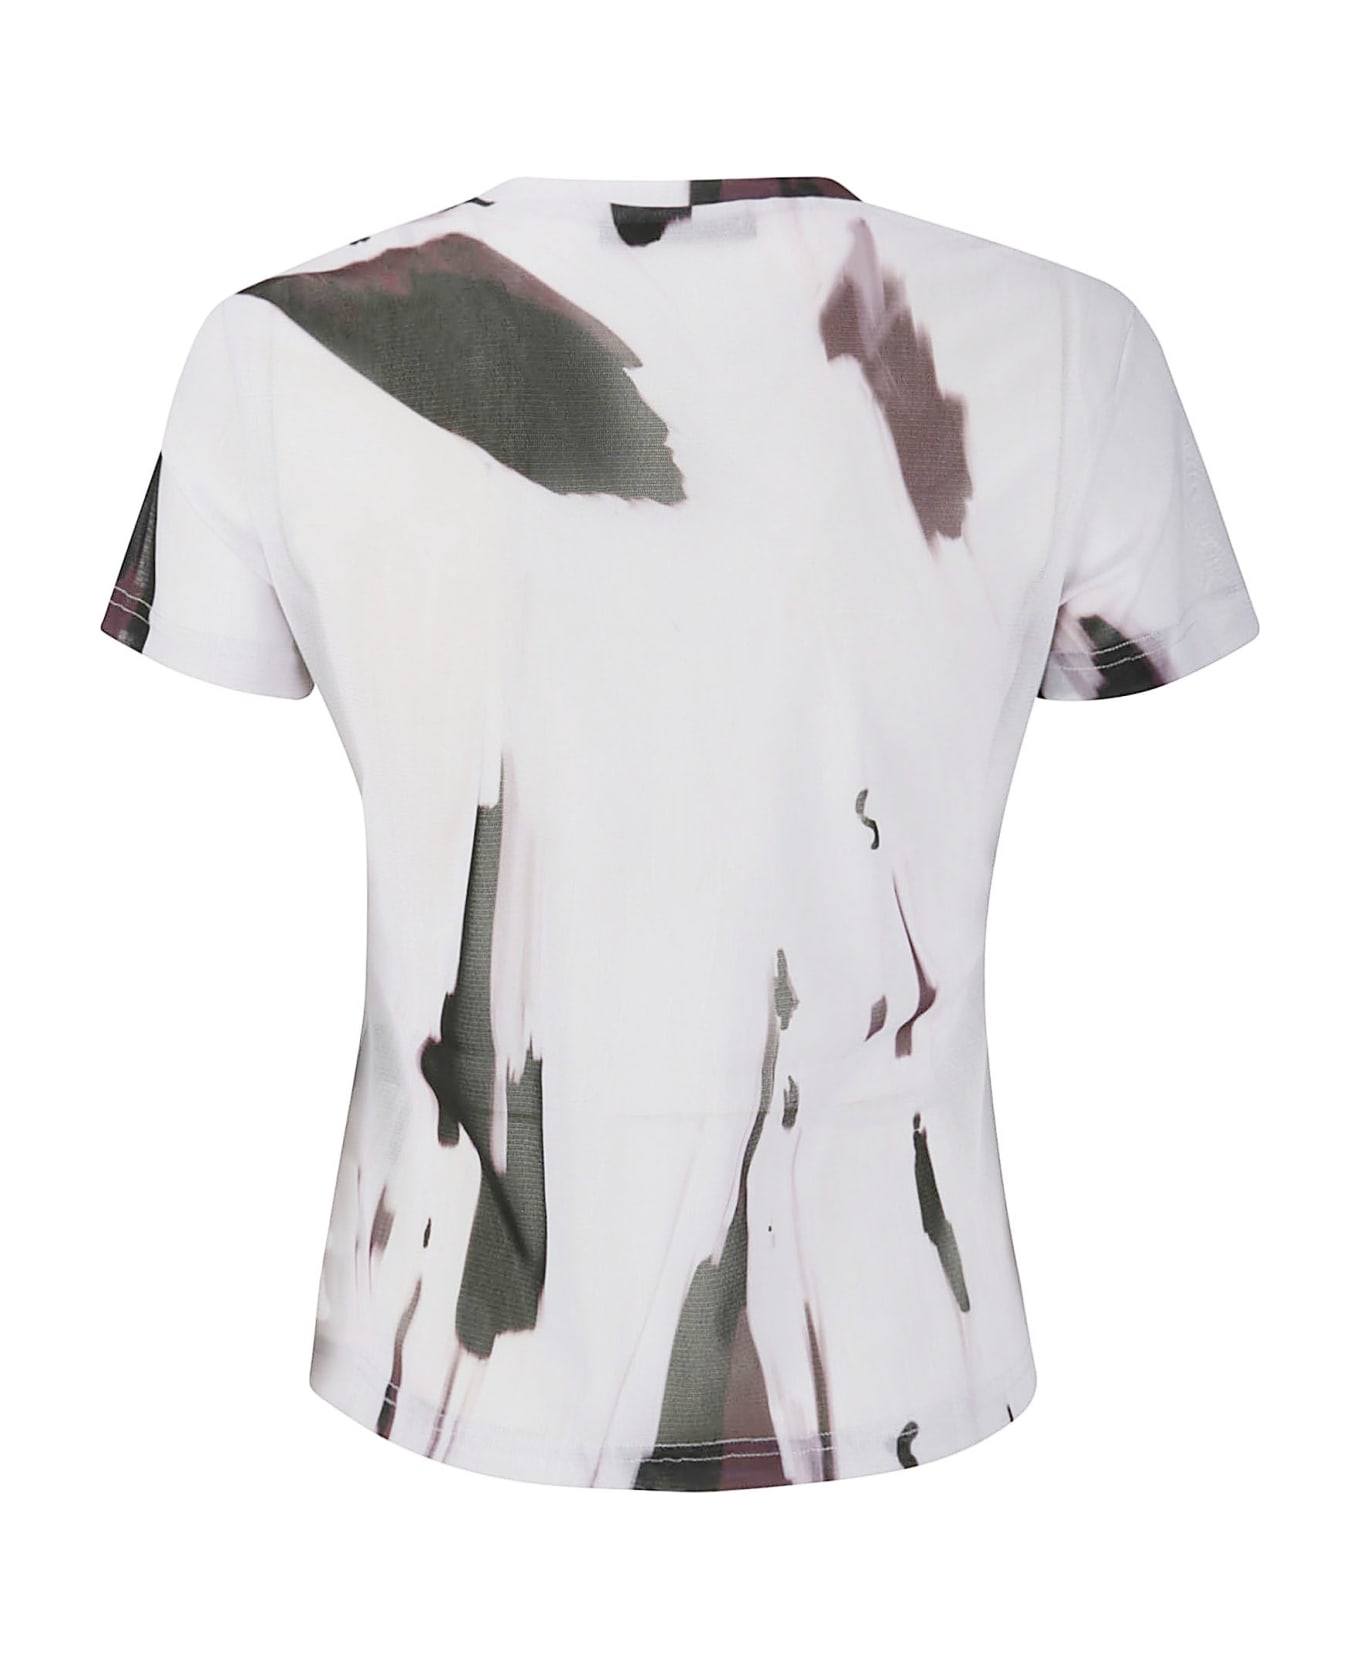 SSHEENA T-shirt - LEAF